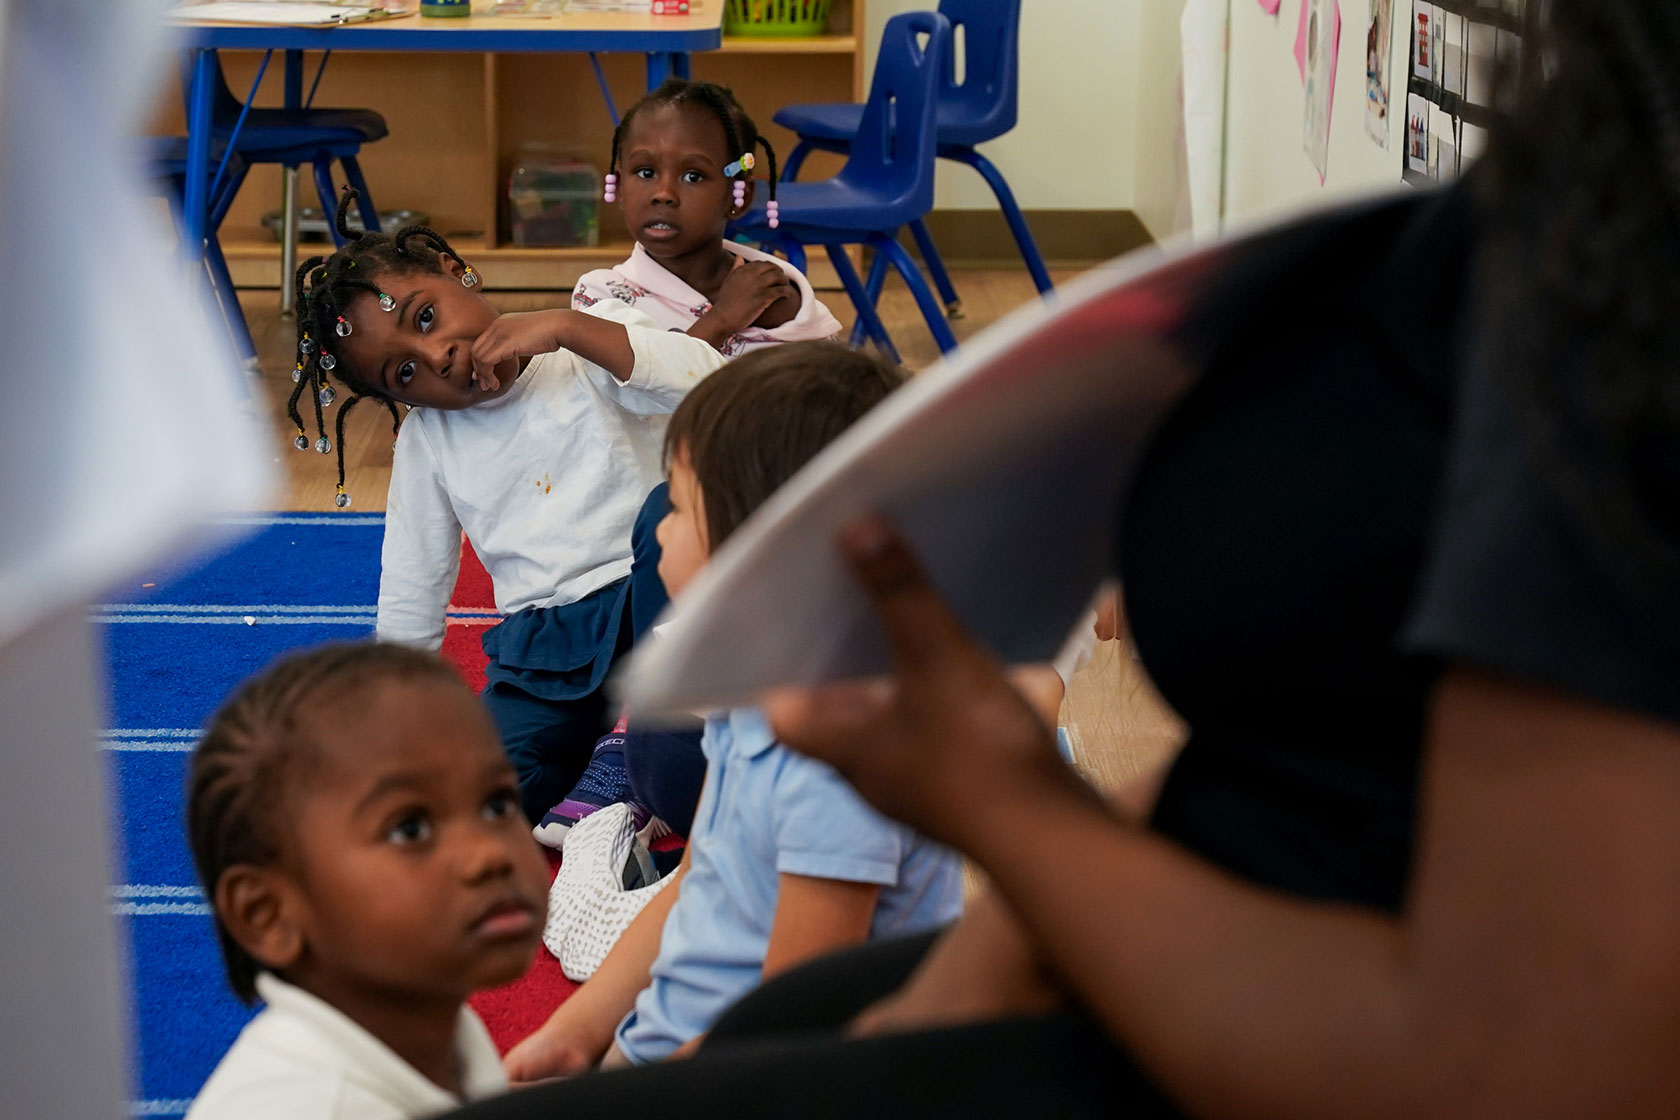 A teacher leads a preschool class at an early learning public charter school in Washington, D.C.